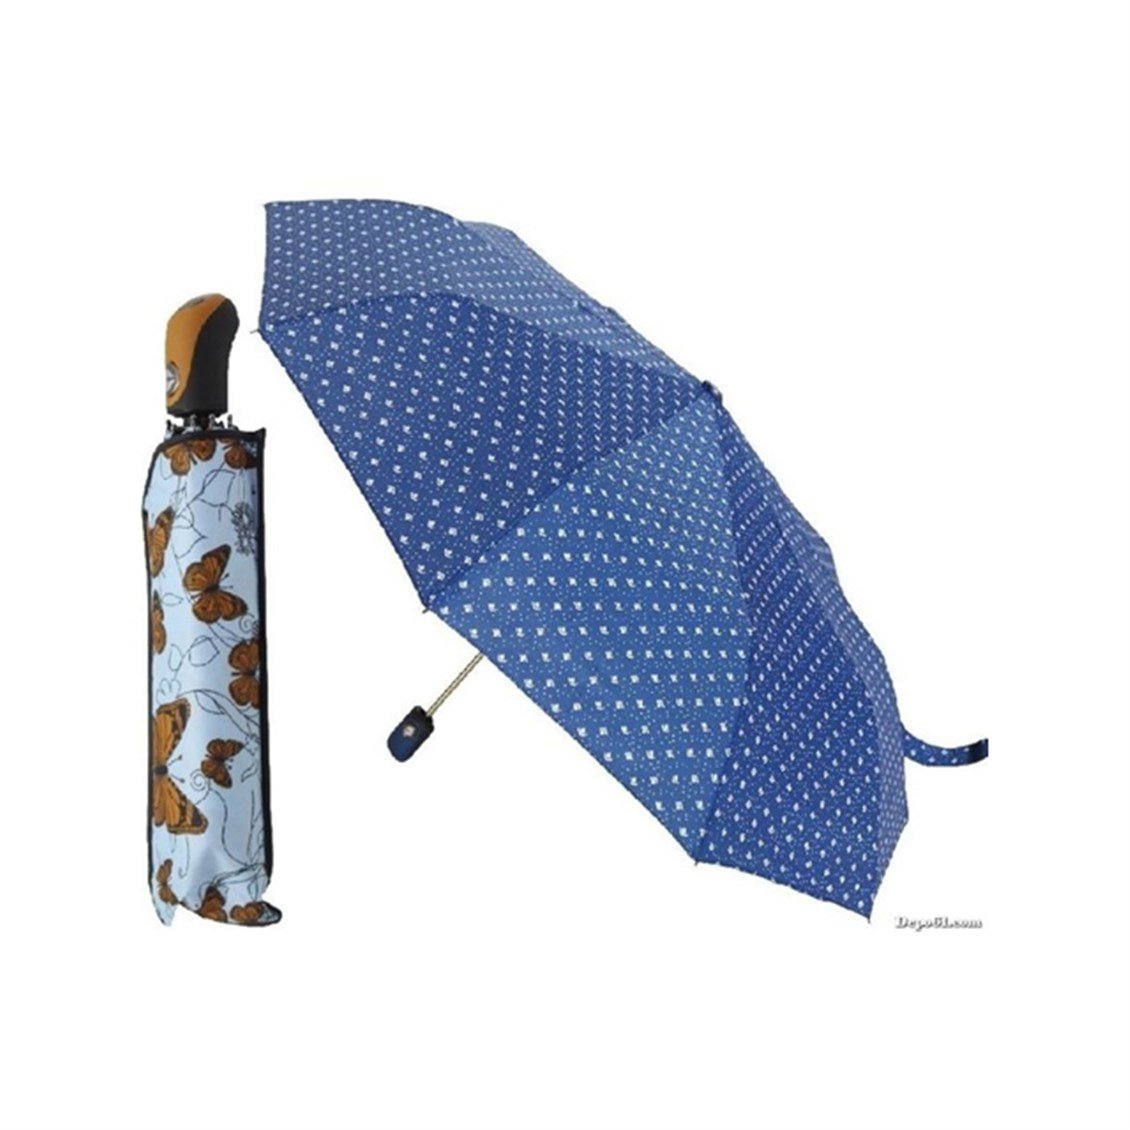 Bayan Şemsiye 10 Tel RB 015 - Onur Market